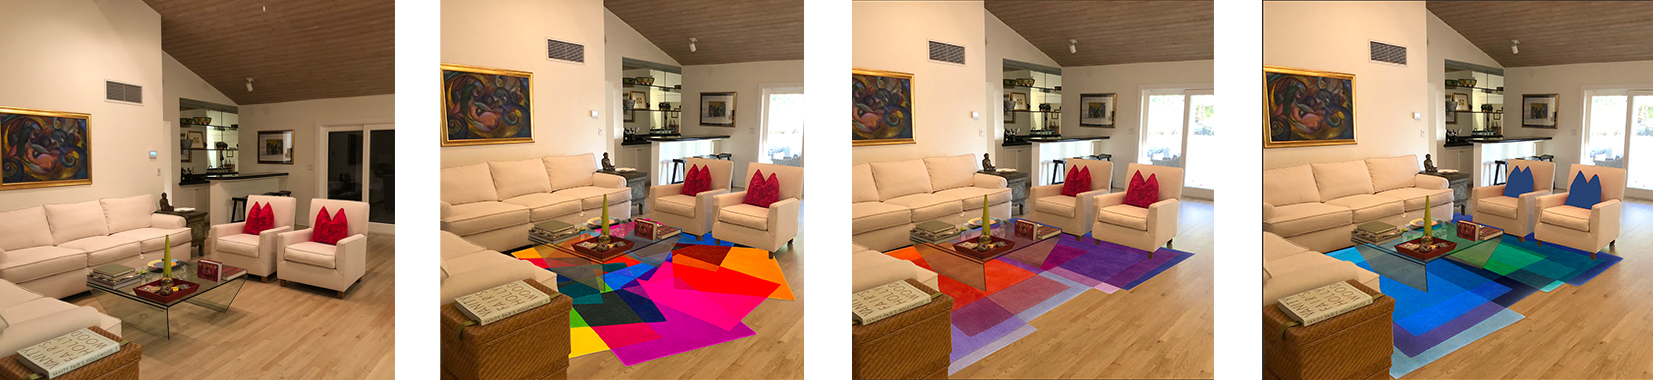 Designer rugs for living room - USA Home